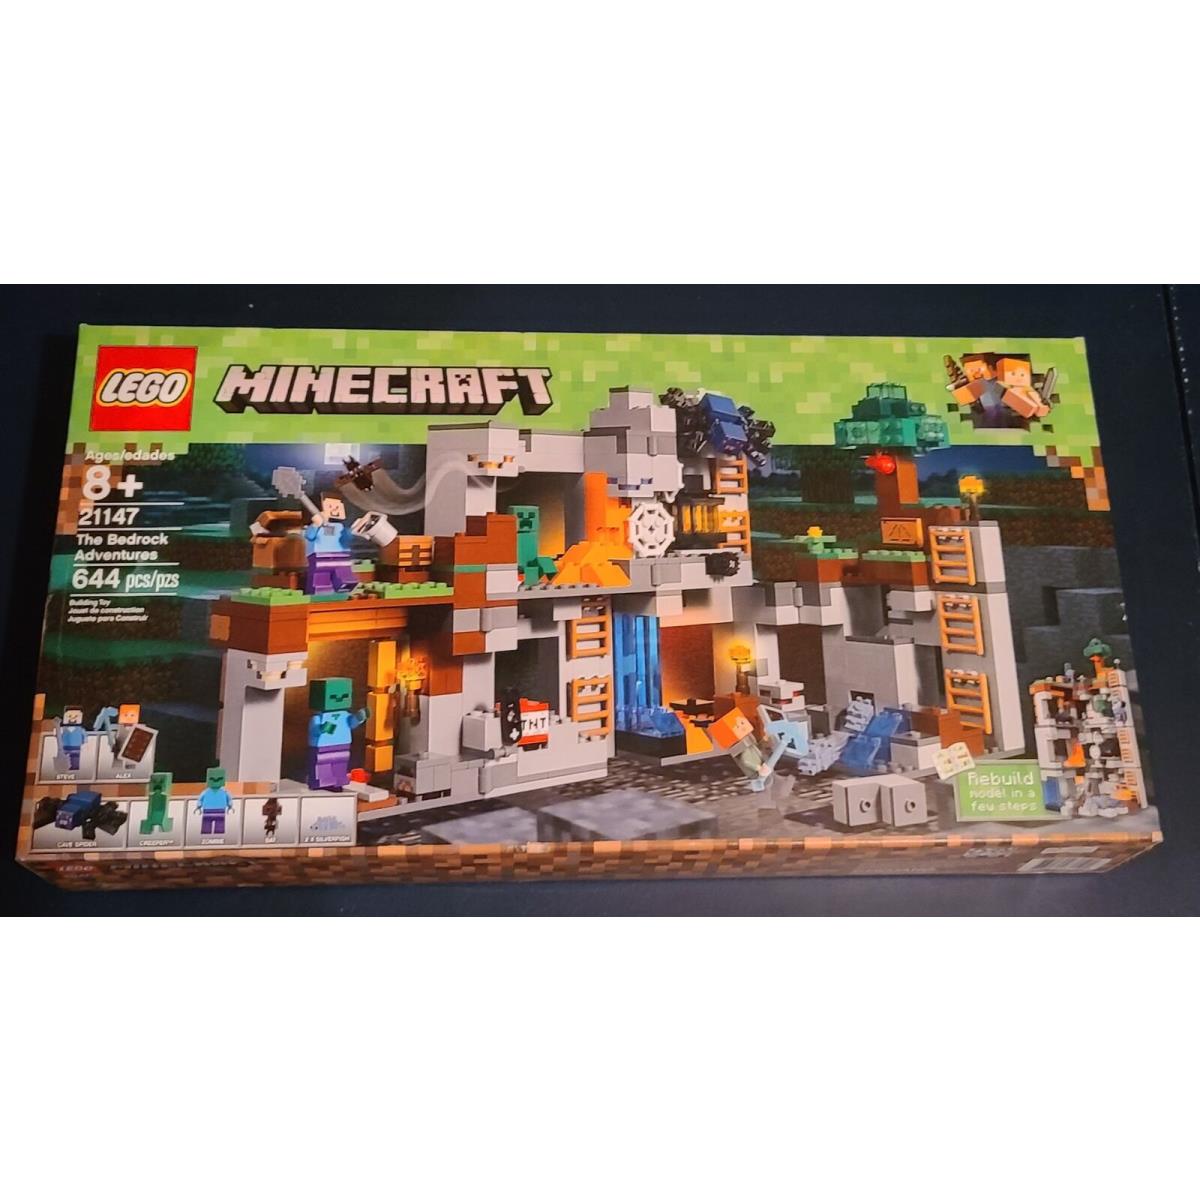 Lego 21147 Minecraft The Bedrock Adventures Set